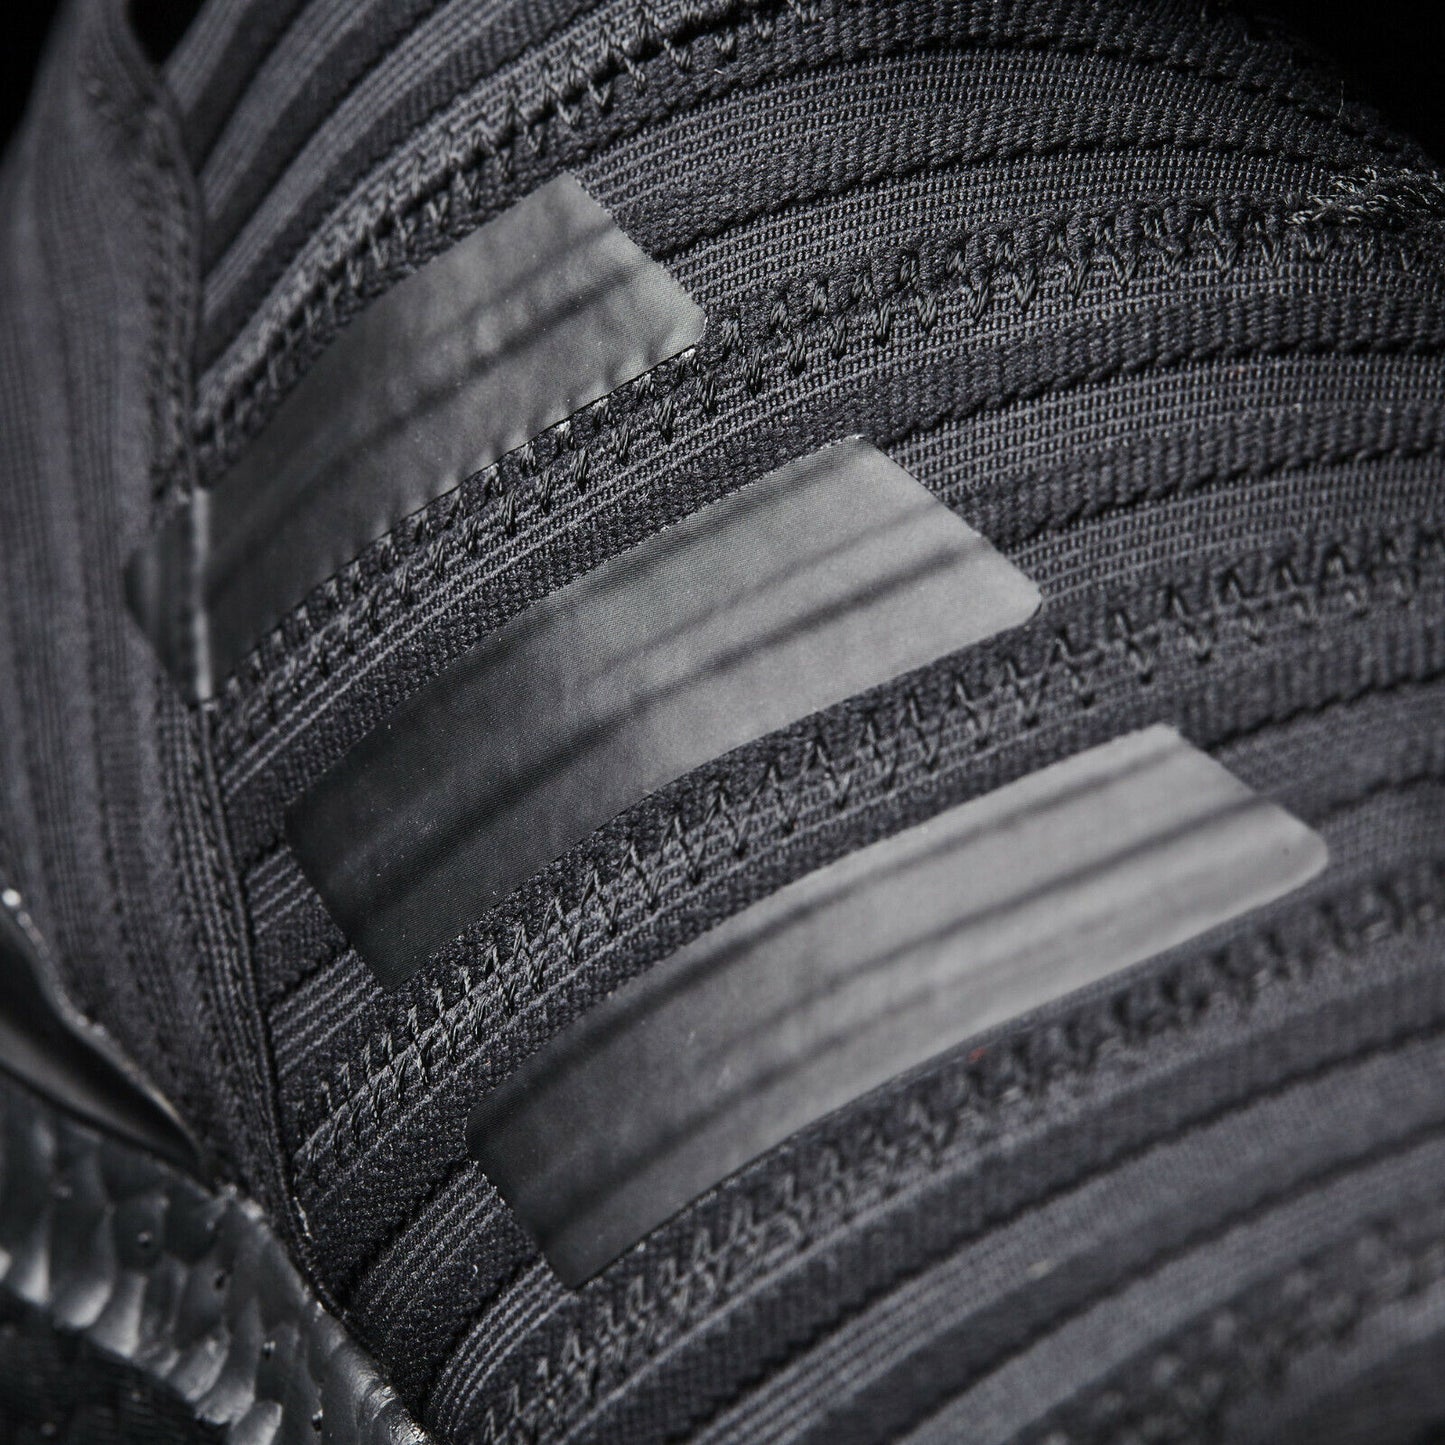 adidas Nemeziz Tango 17+ 360 Agility Ultra Boost Triple Black CG3657 SIZE 6 UK